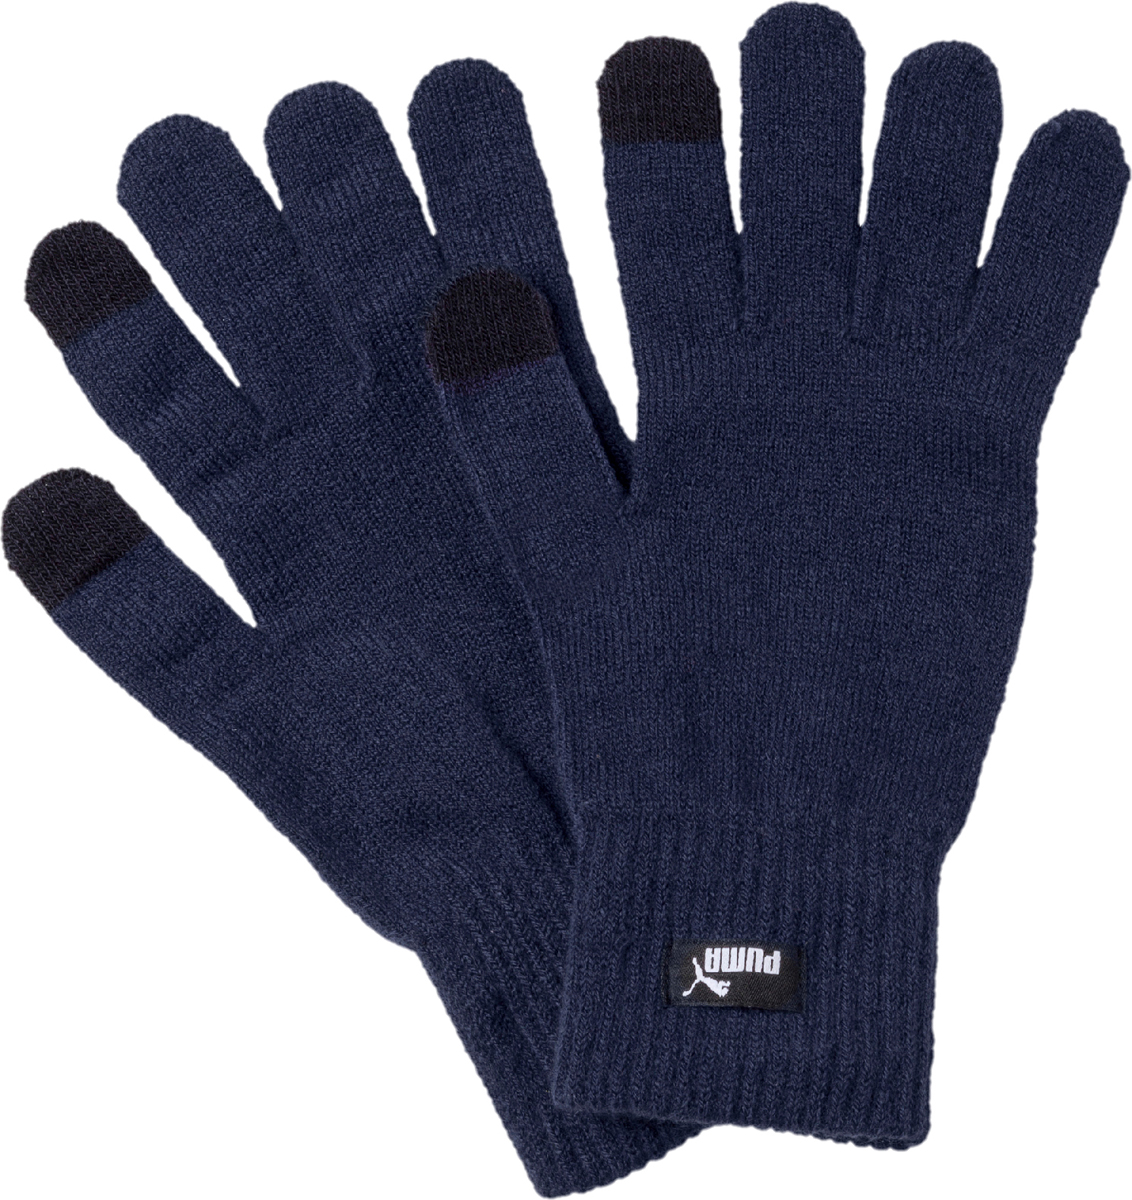 Перчатки Puma Knit Gloves, цвет: темно-синий. 04131605. Размер M/L (8)